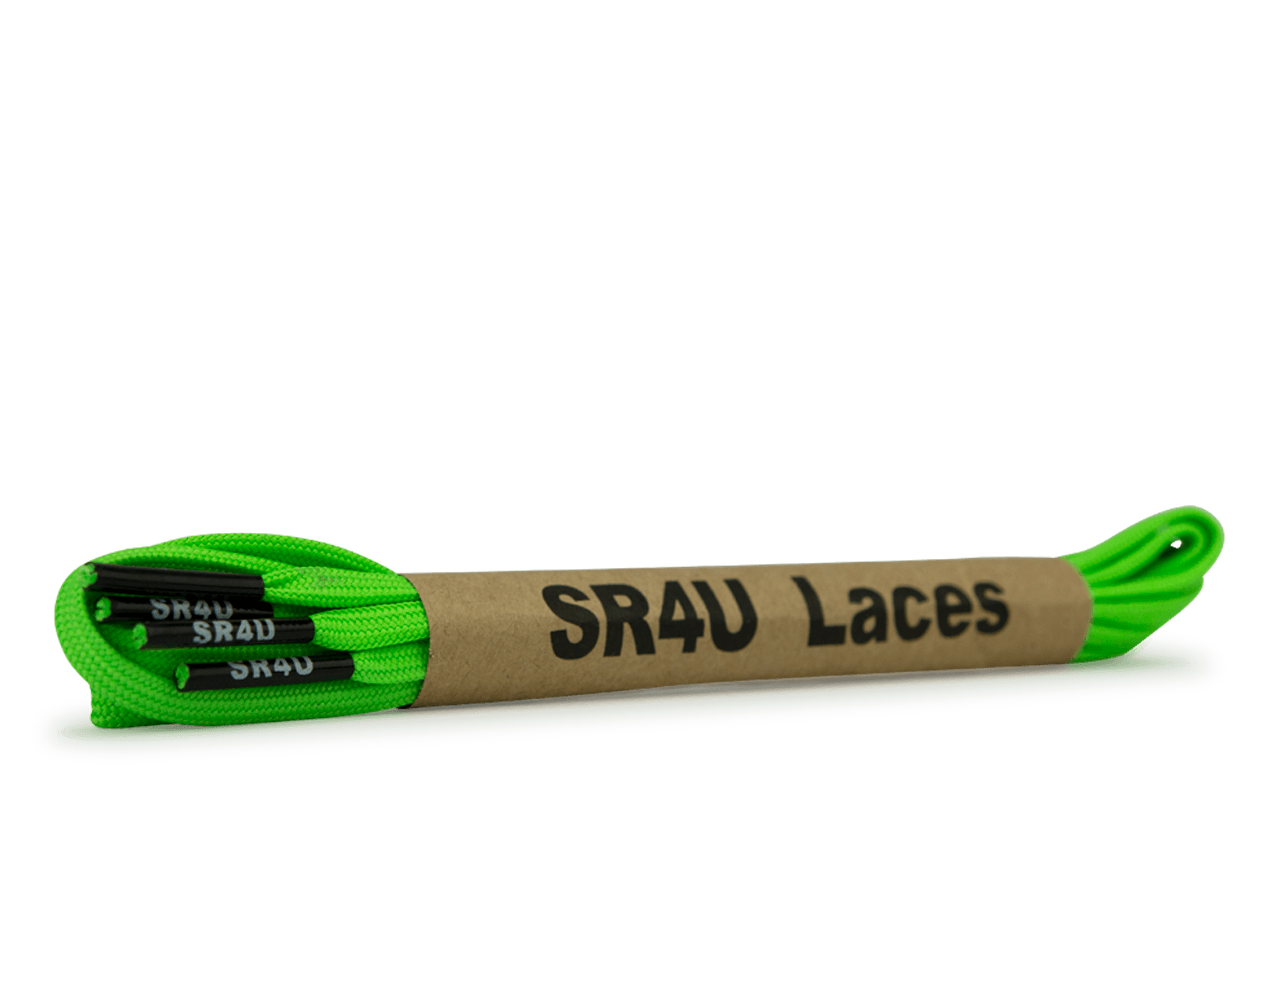  SR4U Soccer Shoe Laces Green